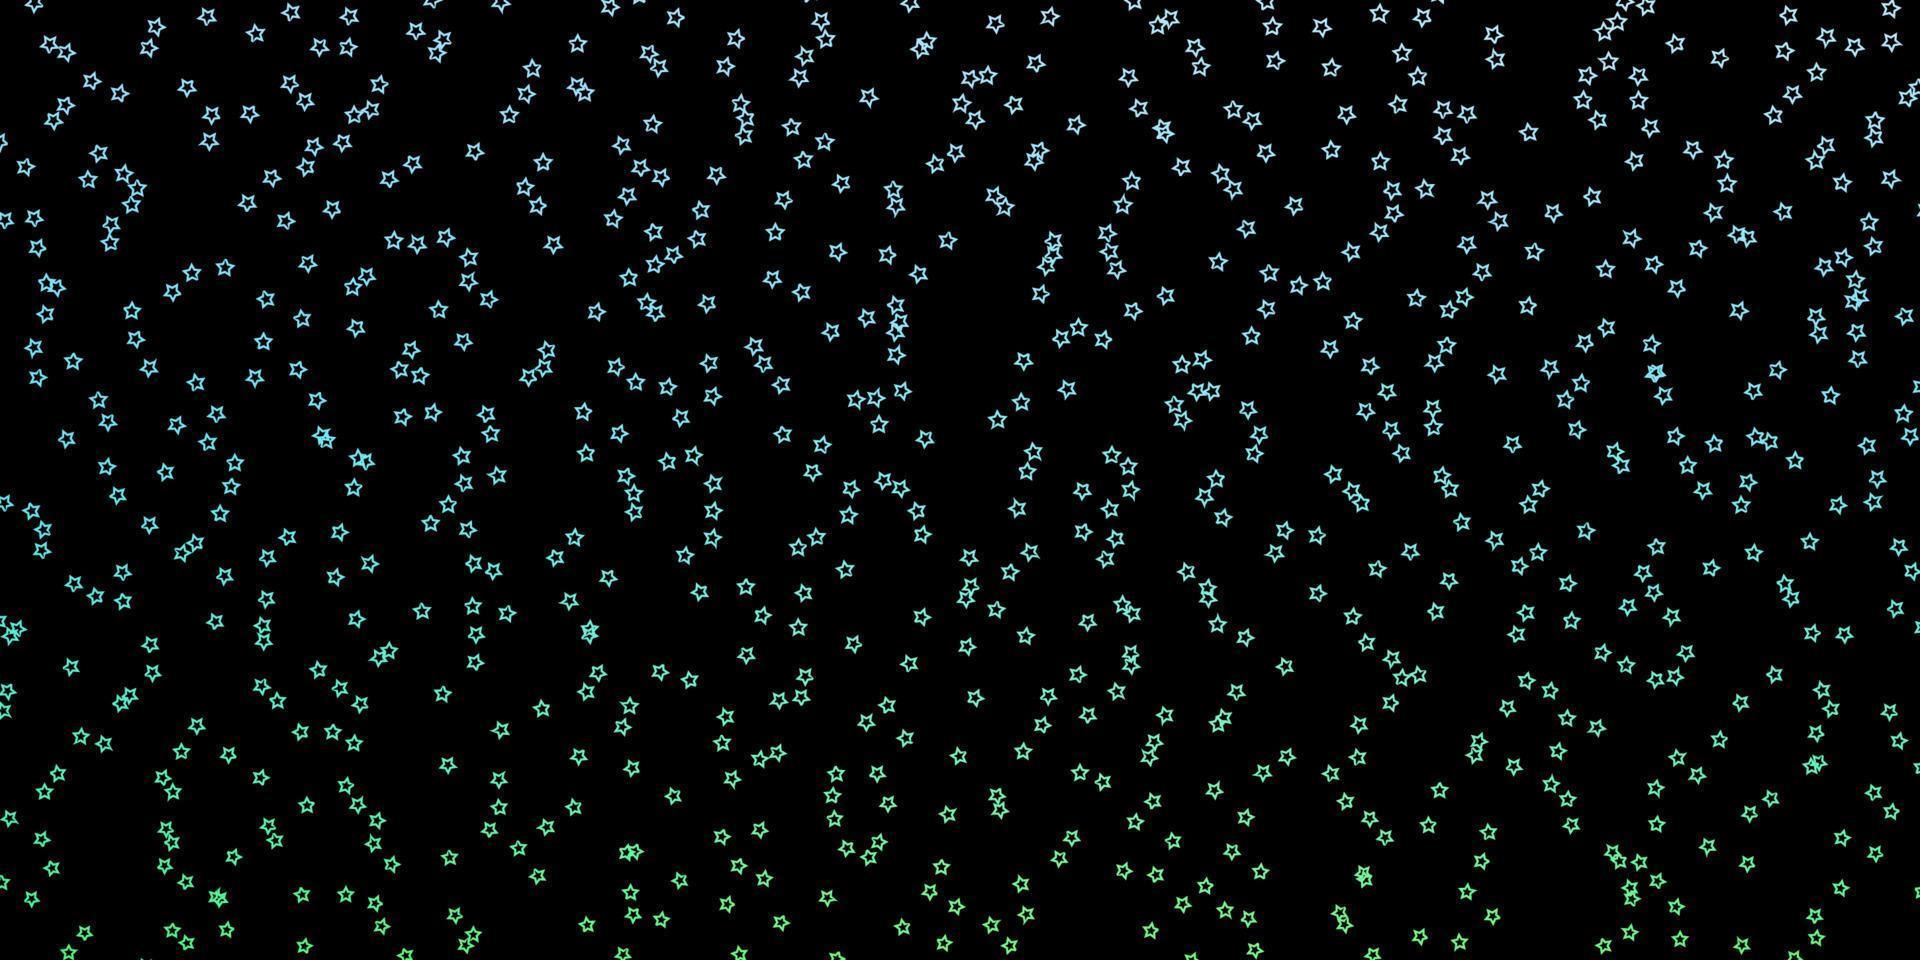 Dark Blue, Green vector template with neon stars.